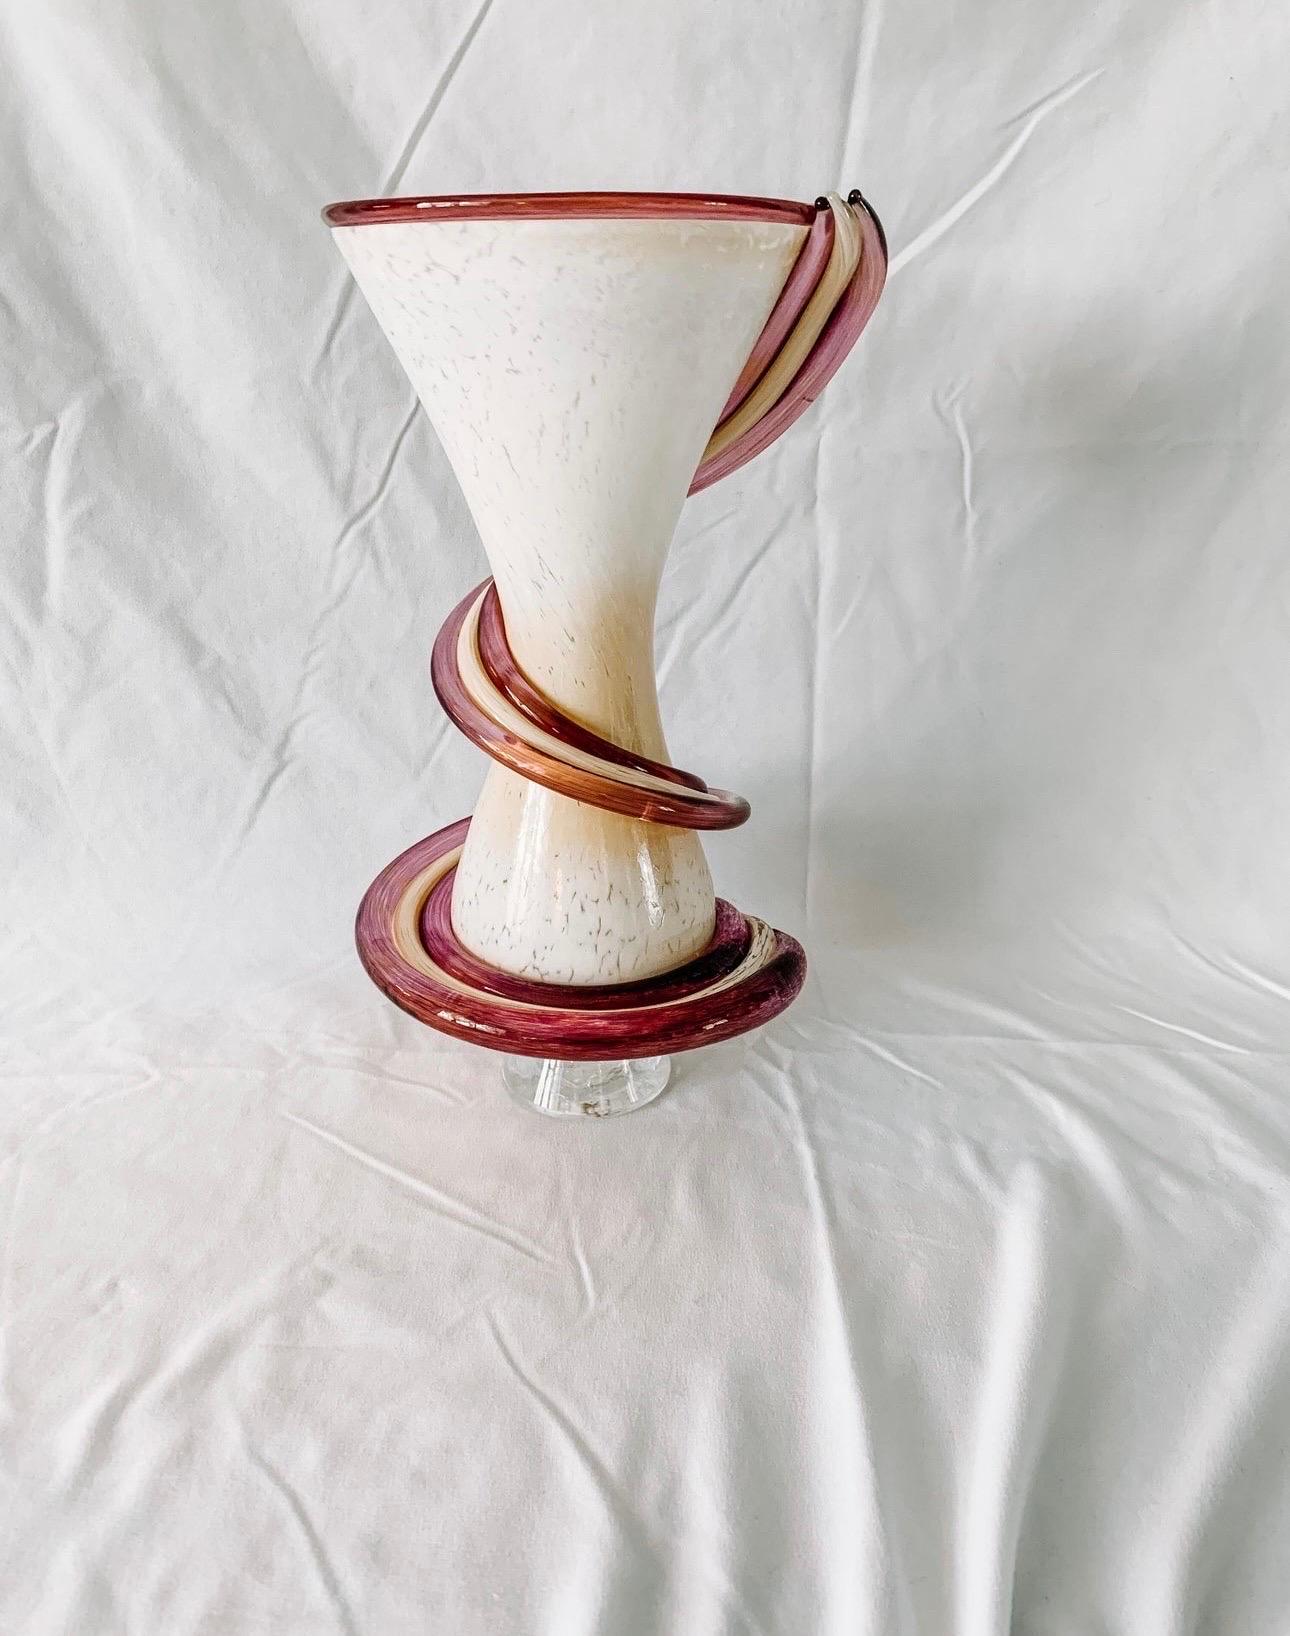 Verre d'art Vase postmoderne tourbillonnant de style Murano signé 2012 Chong en vente